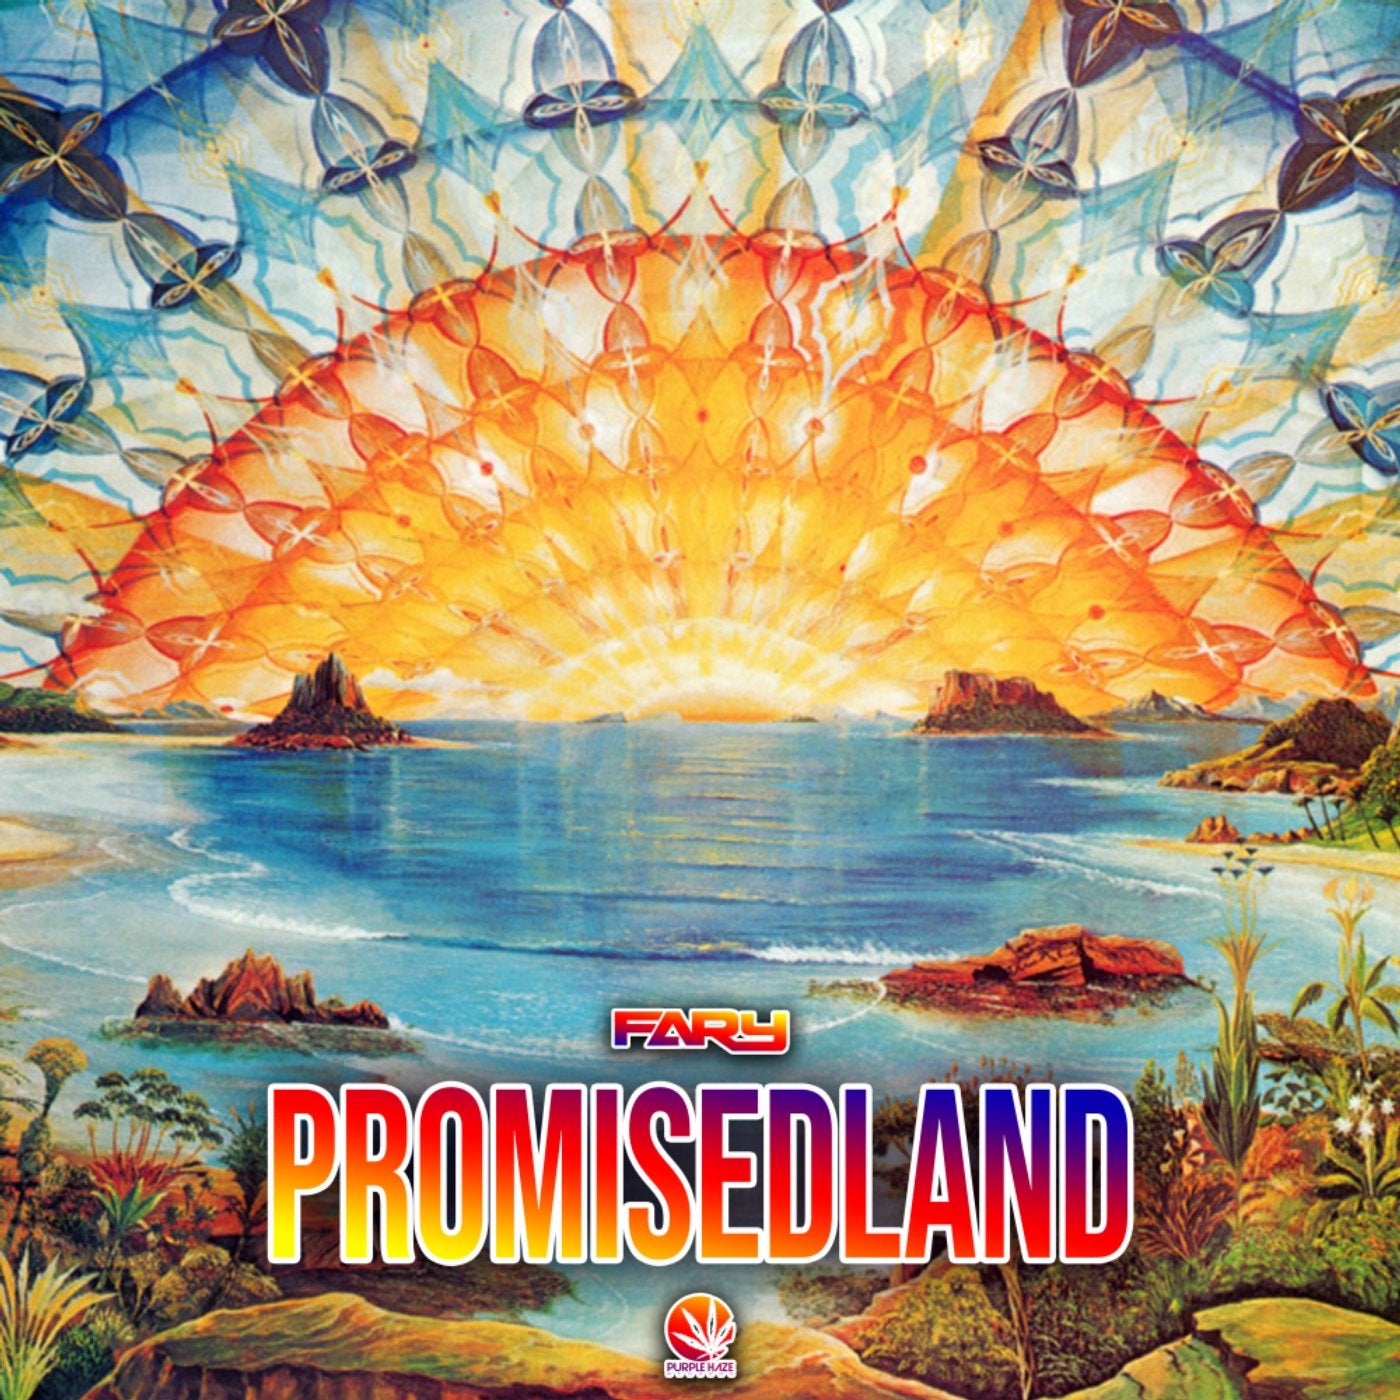 Promiseland